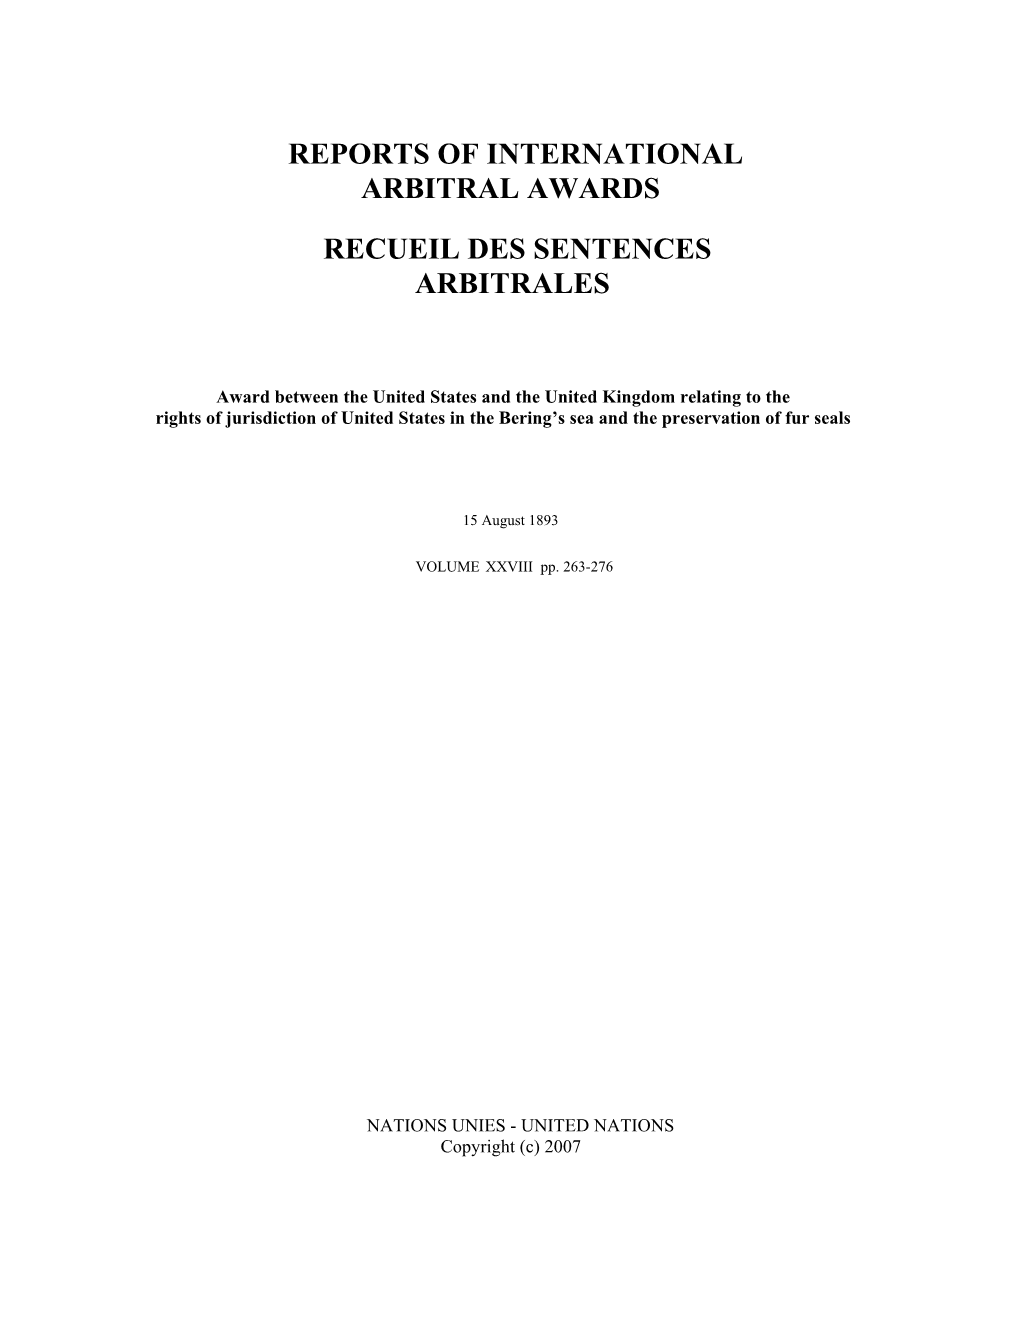 Reports of International Arbitral Awards Recueil Des Sentences Arbitrales